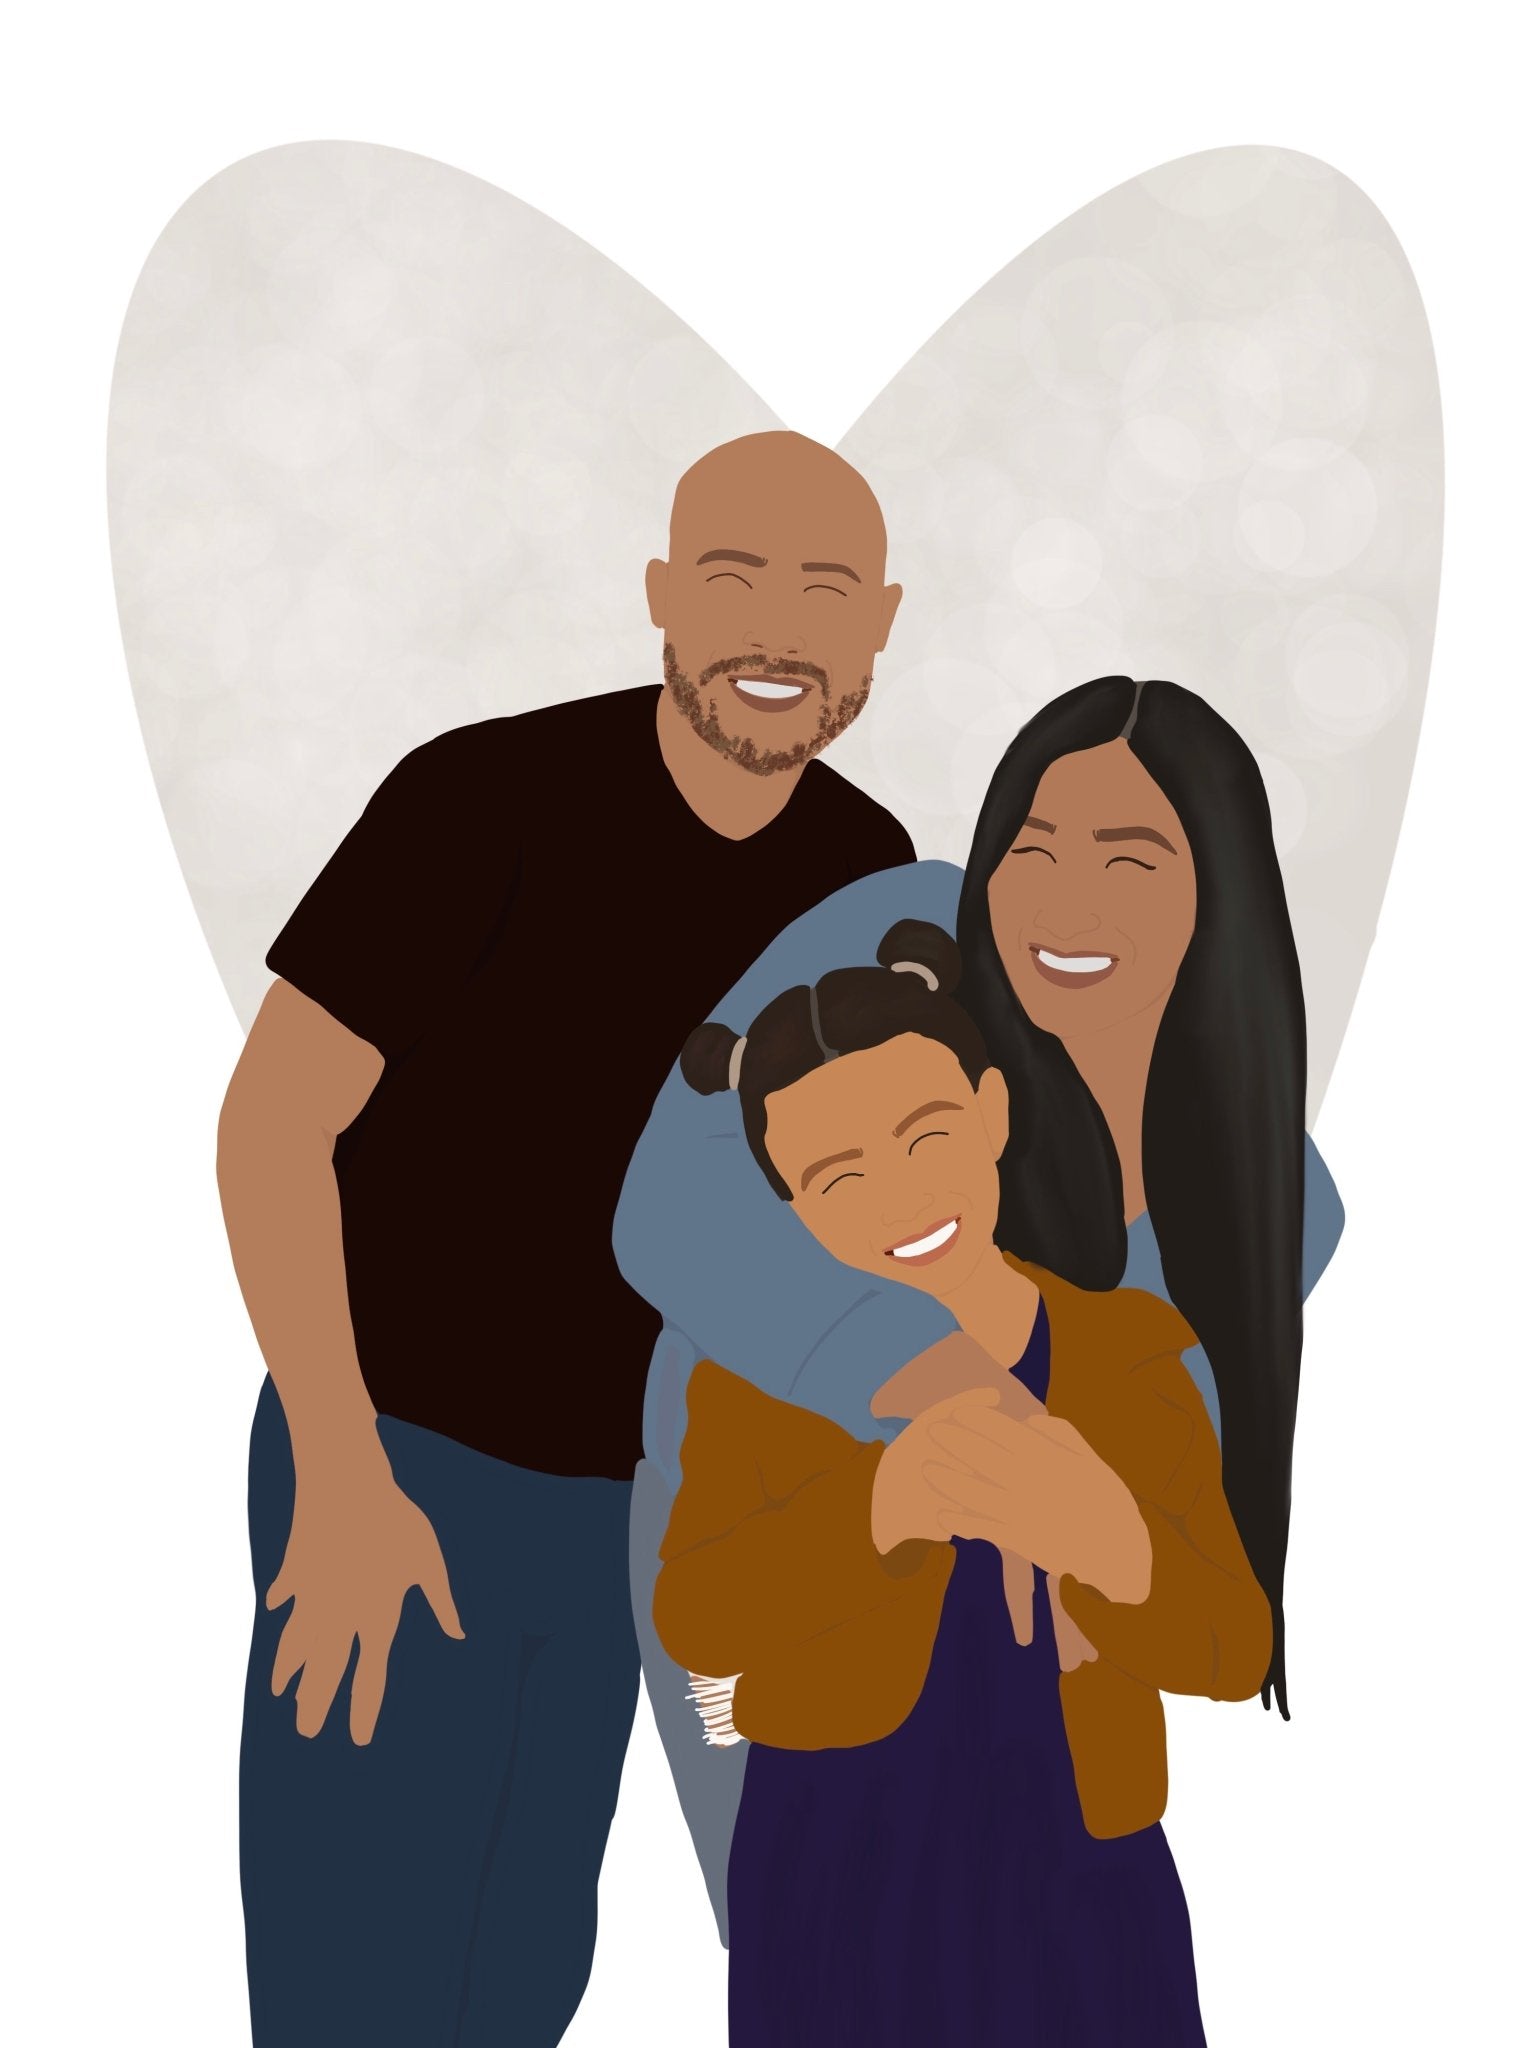 Cuddling family minimalist art digital illustration with heart on the background